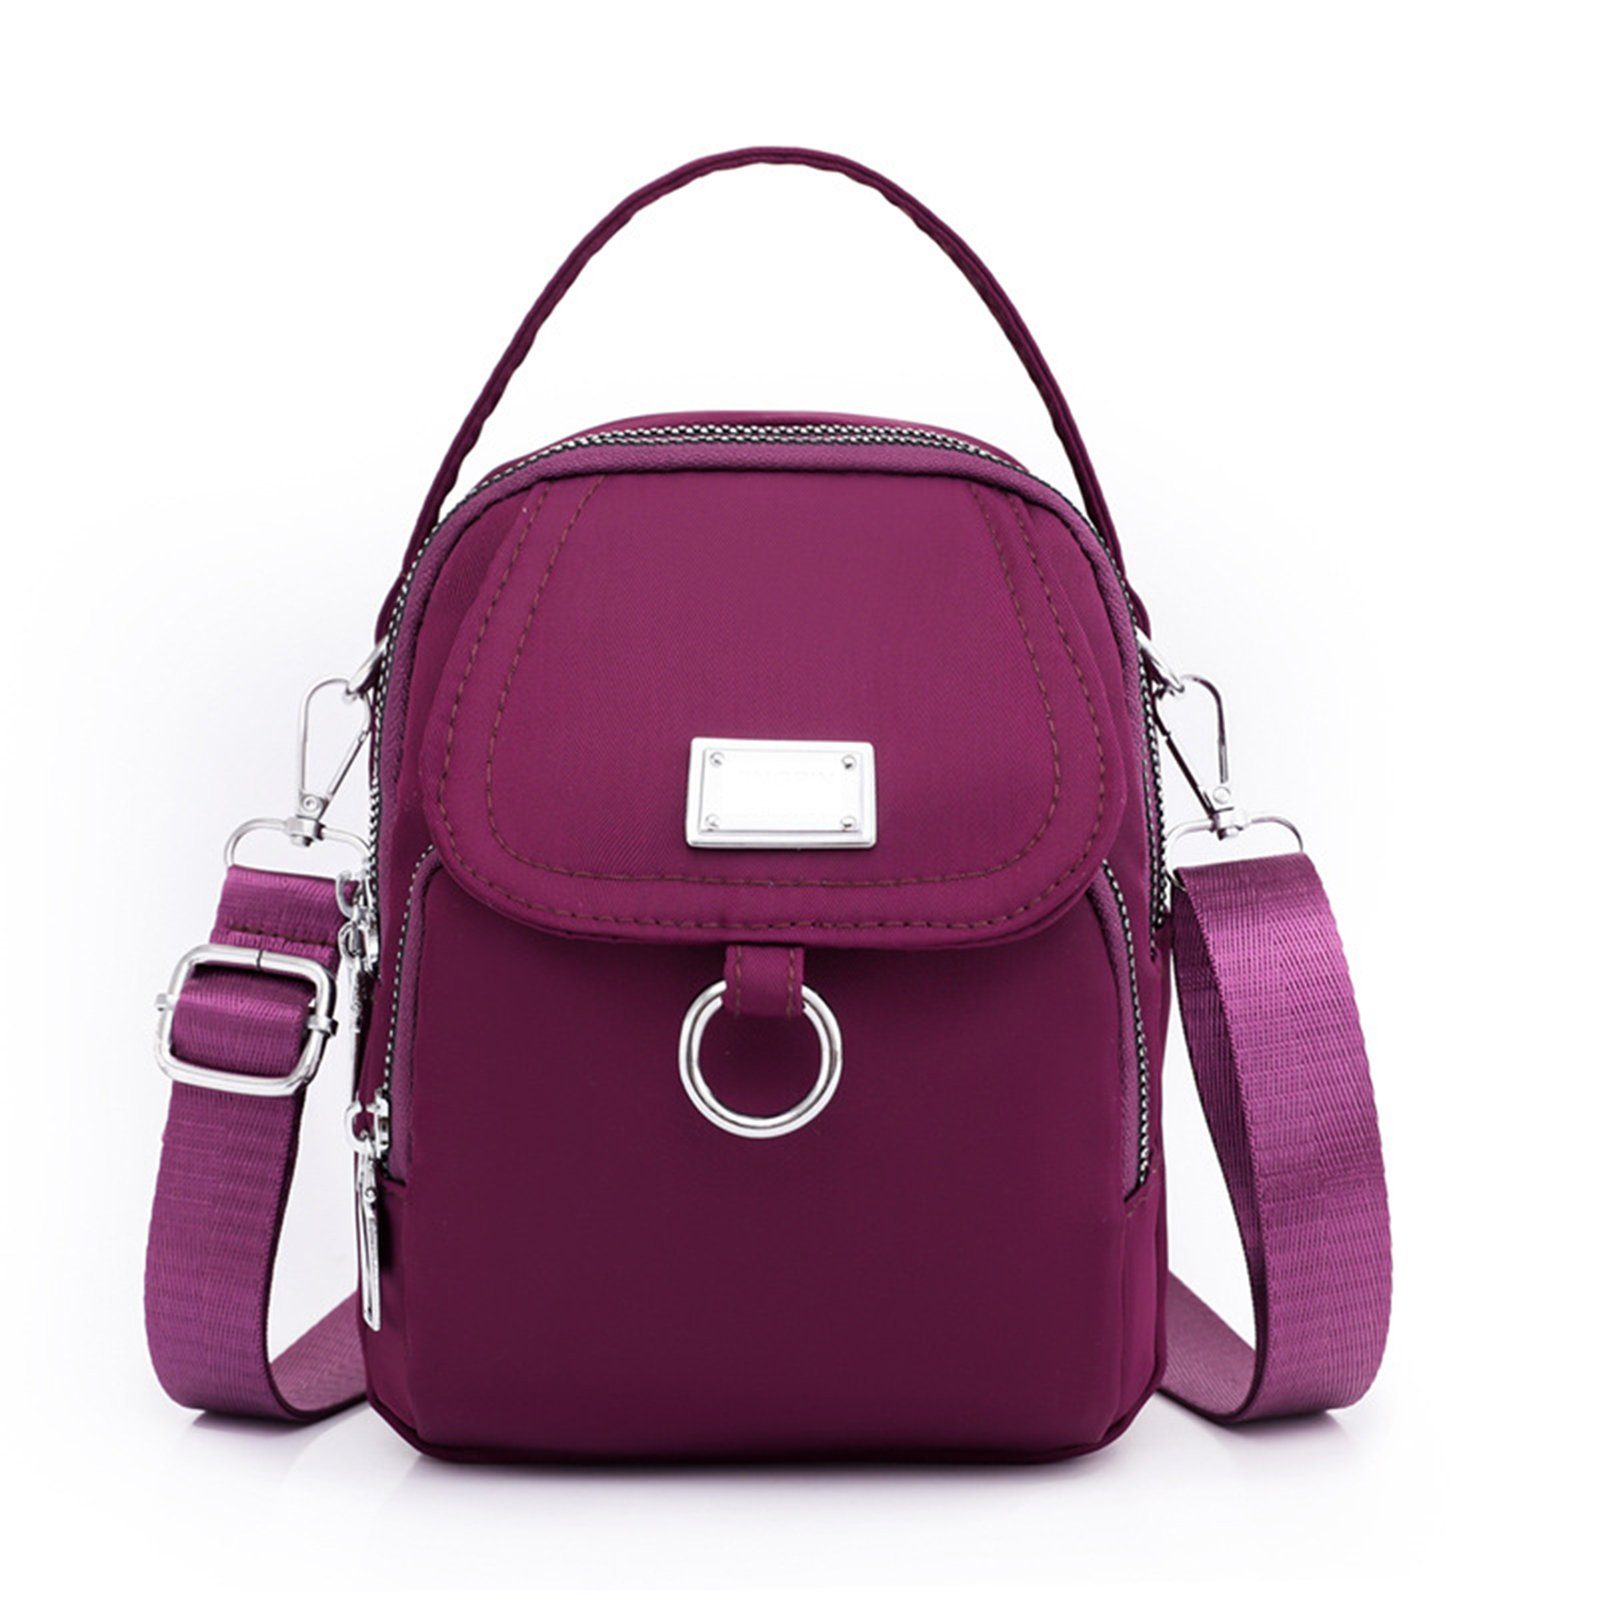 Blusmart Umhängetasche Damen-Umhängetasche, Reißverschluss-Schultertasche, Crossbody Bag purple